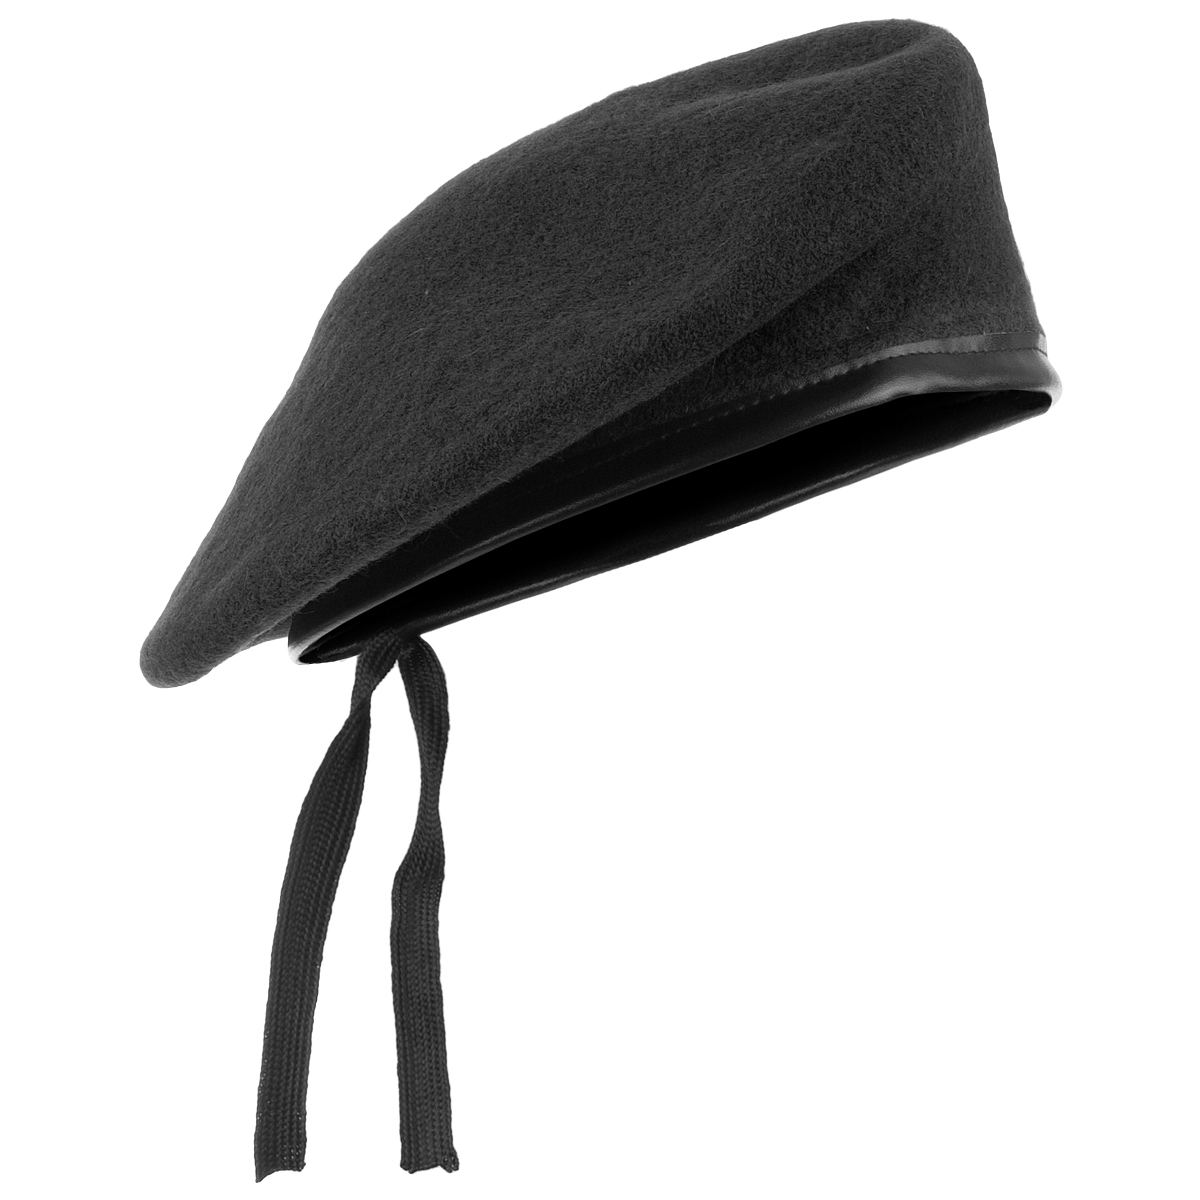 Moška baretka, baretka, prodaja baretka vojaška baretka, kje kupiti baretko, francoska baretka, nemška baretka, BW baretka, army shop baretka, volnena baretka, komando baretka, B33 army shop, army shop, vojaška trgovina, vojaška oprema, trgovina z vojaško opremo, vojaška oblačila, trgovina z vojaškimi oblačili